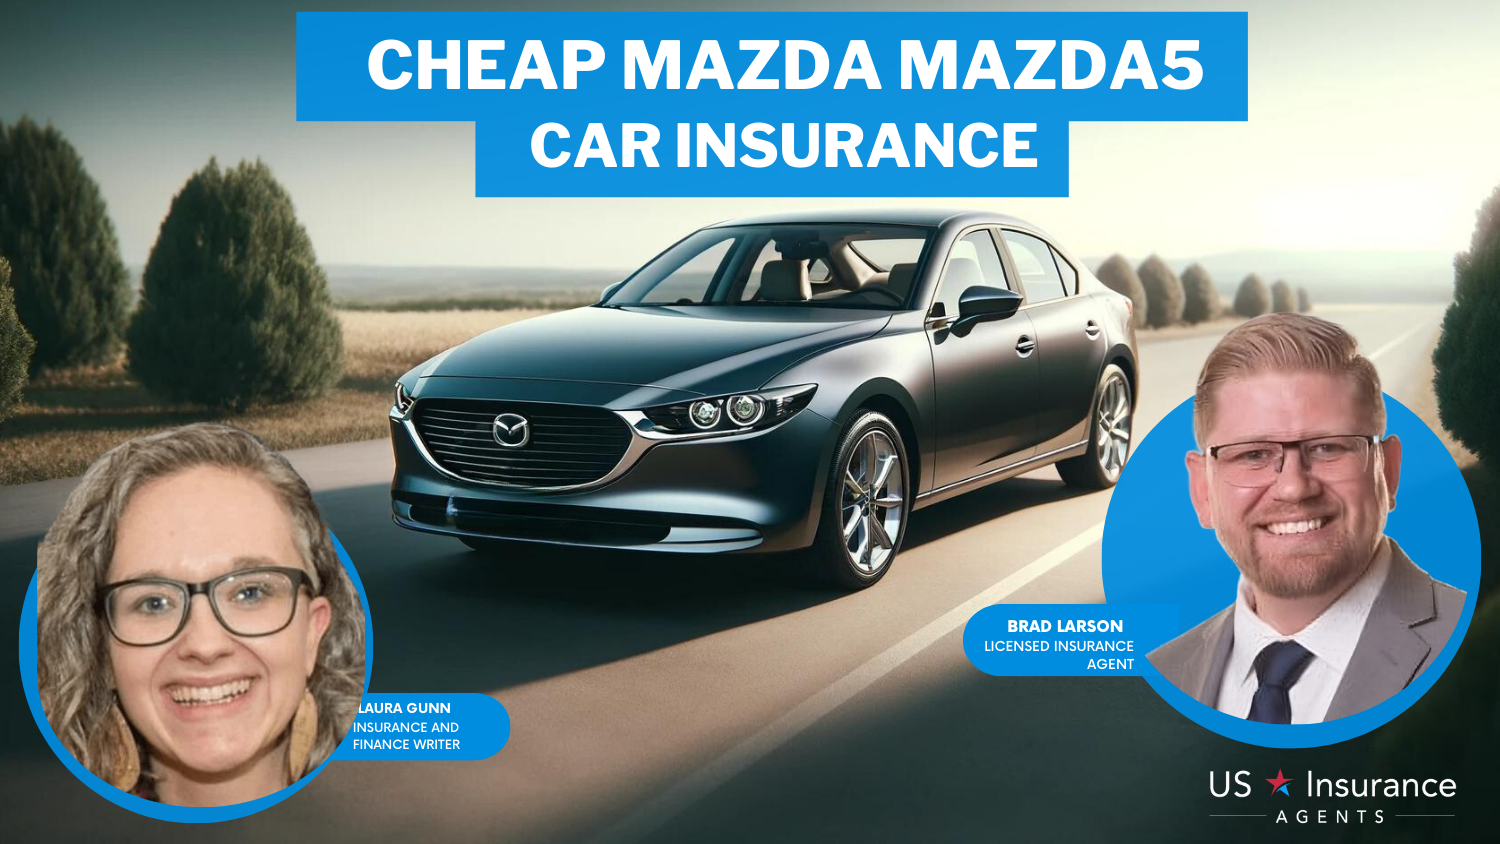 Cheap MAZDA MAZDA5 Car Insurance: State Farm, Progressive, and Nationwide